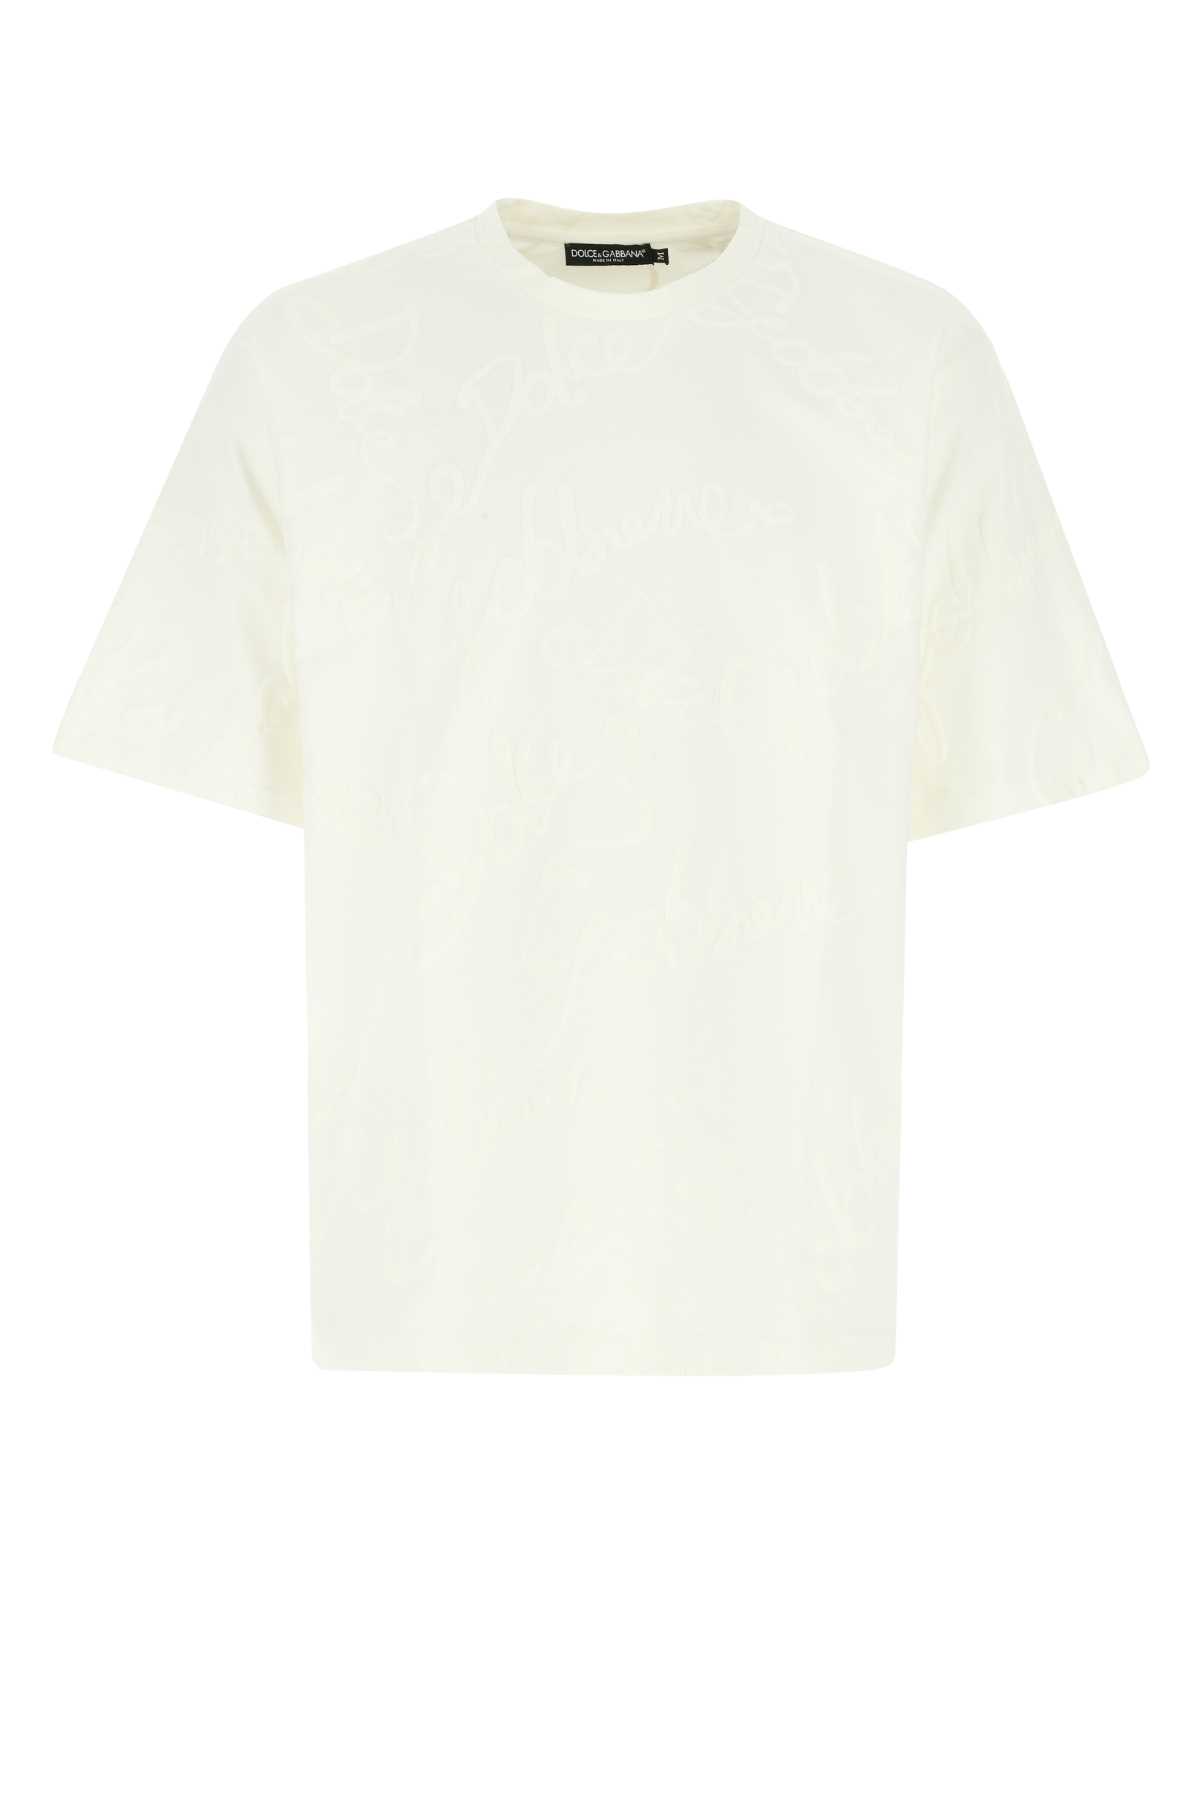 Shop Dolce & Gabbana White Cotton T-shirt In Logobcof.bconat